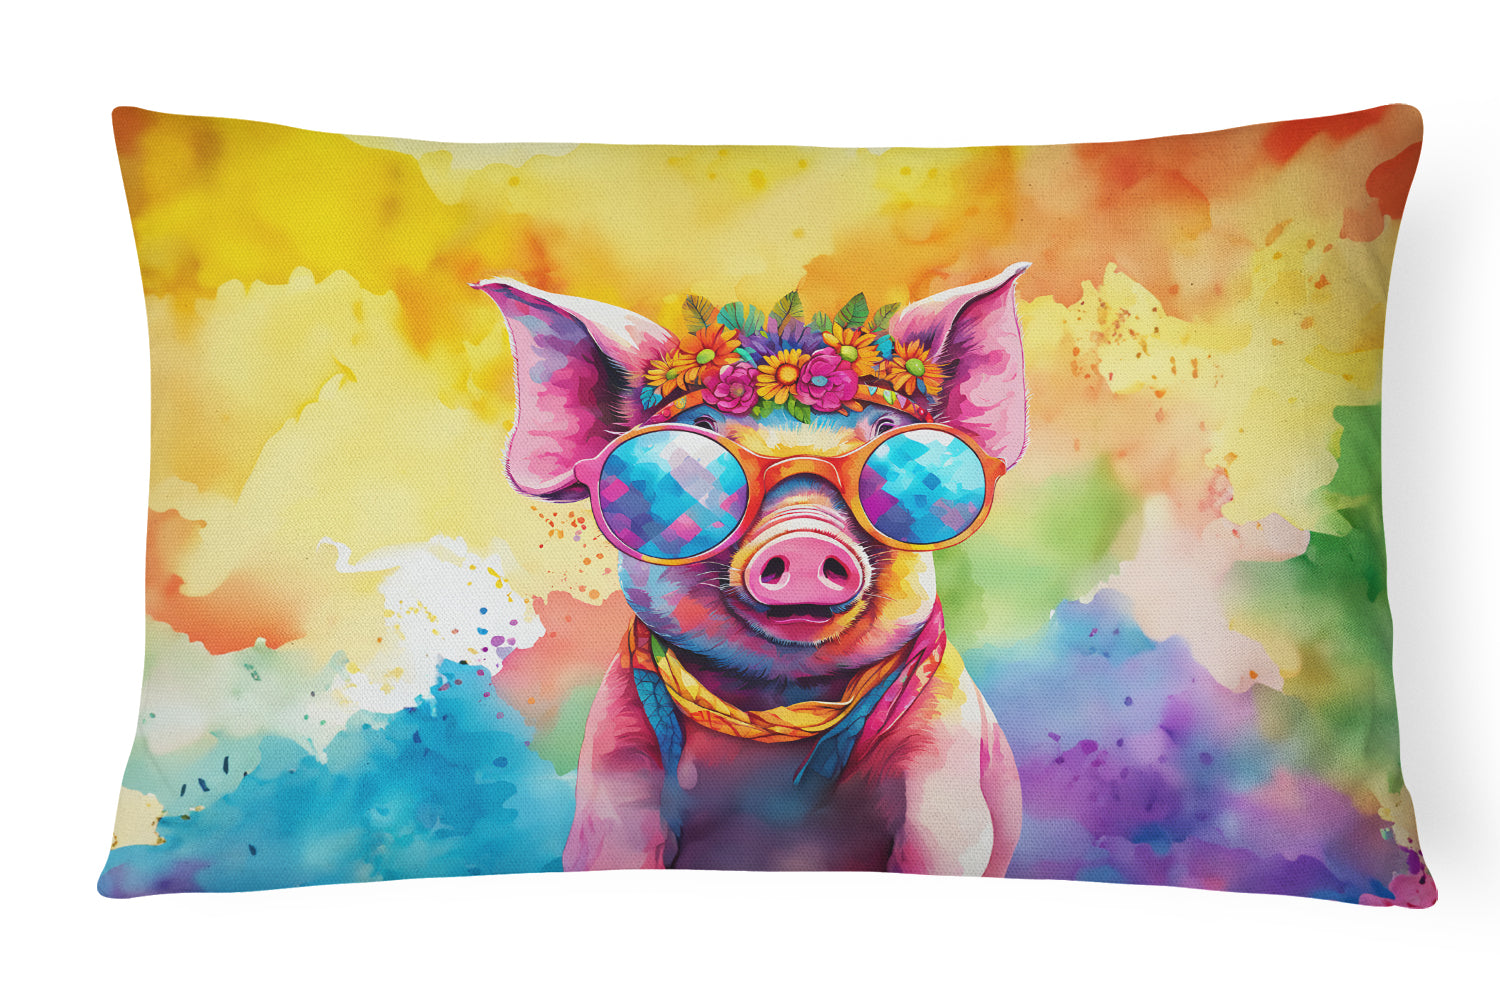 Buy this Hippie Animal Pig Throw Pillow